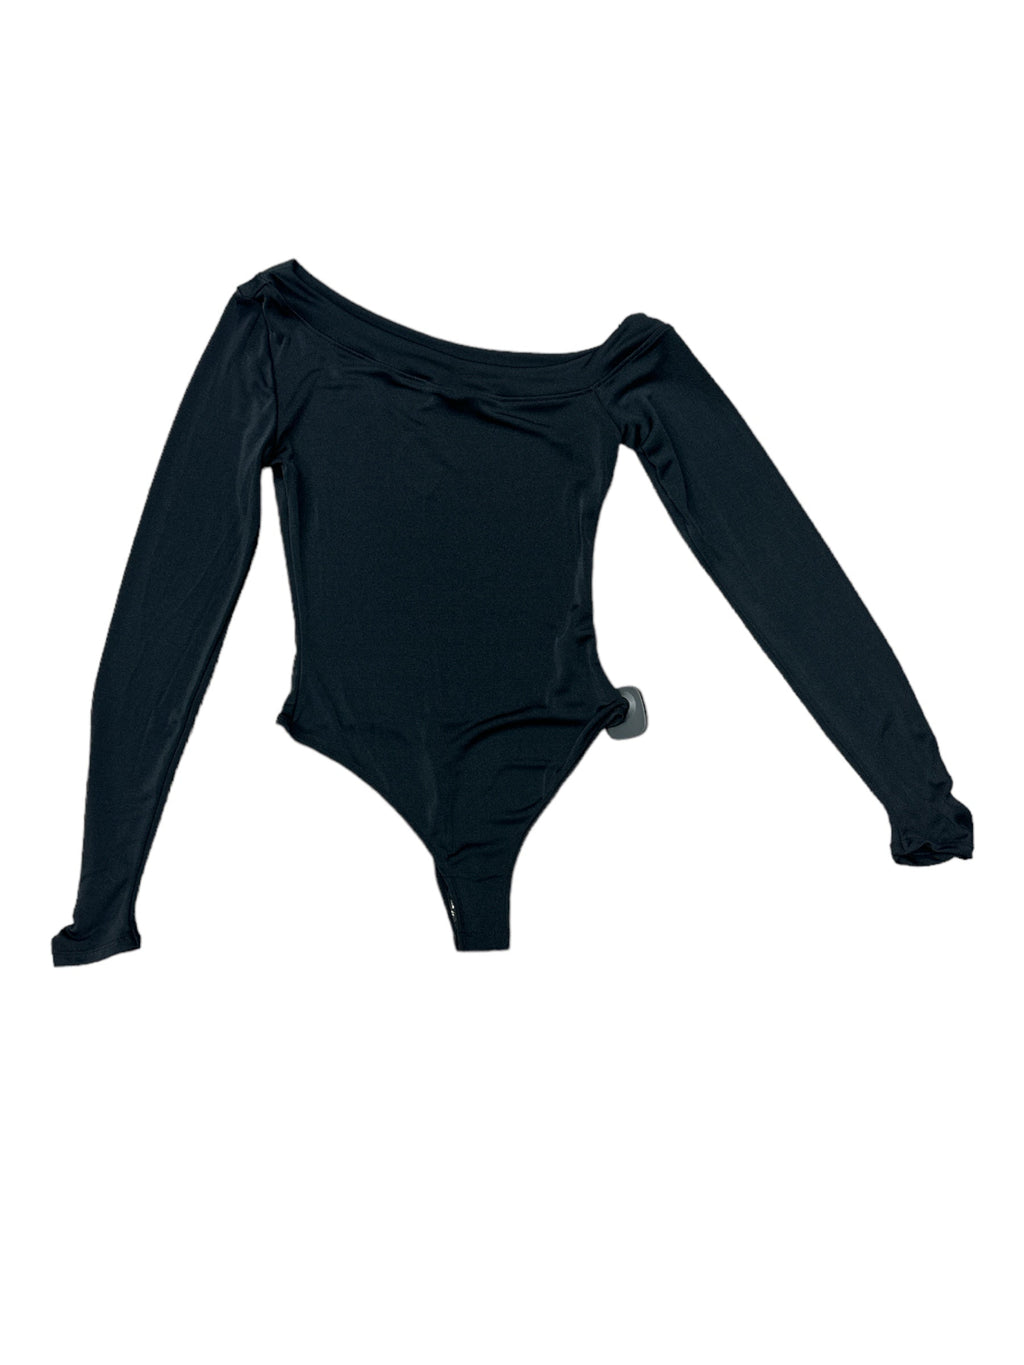 Christine Satin Bodysuit (Black) - Laura's Boutique, Inc